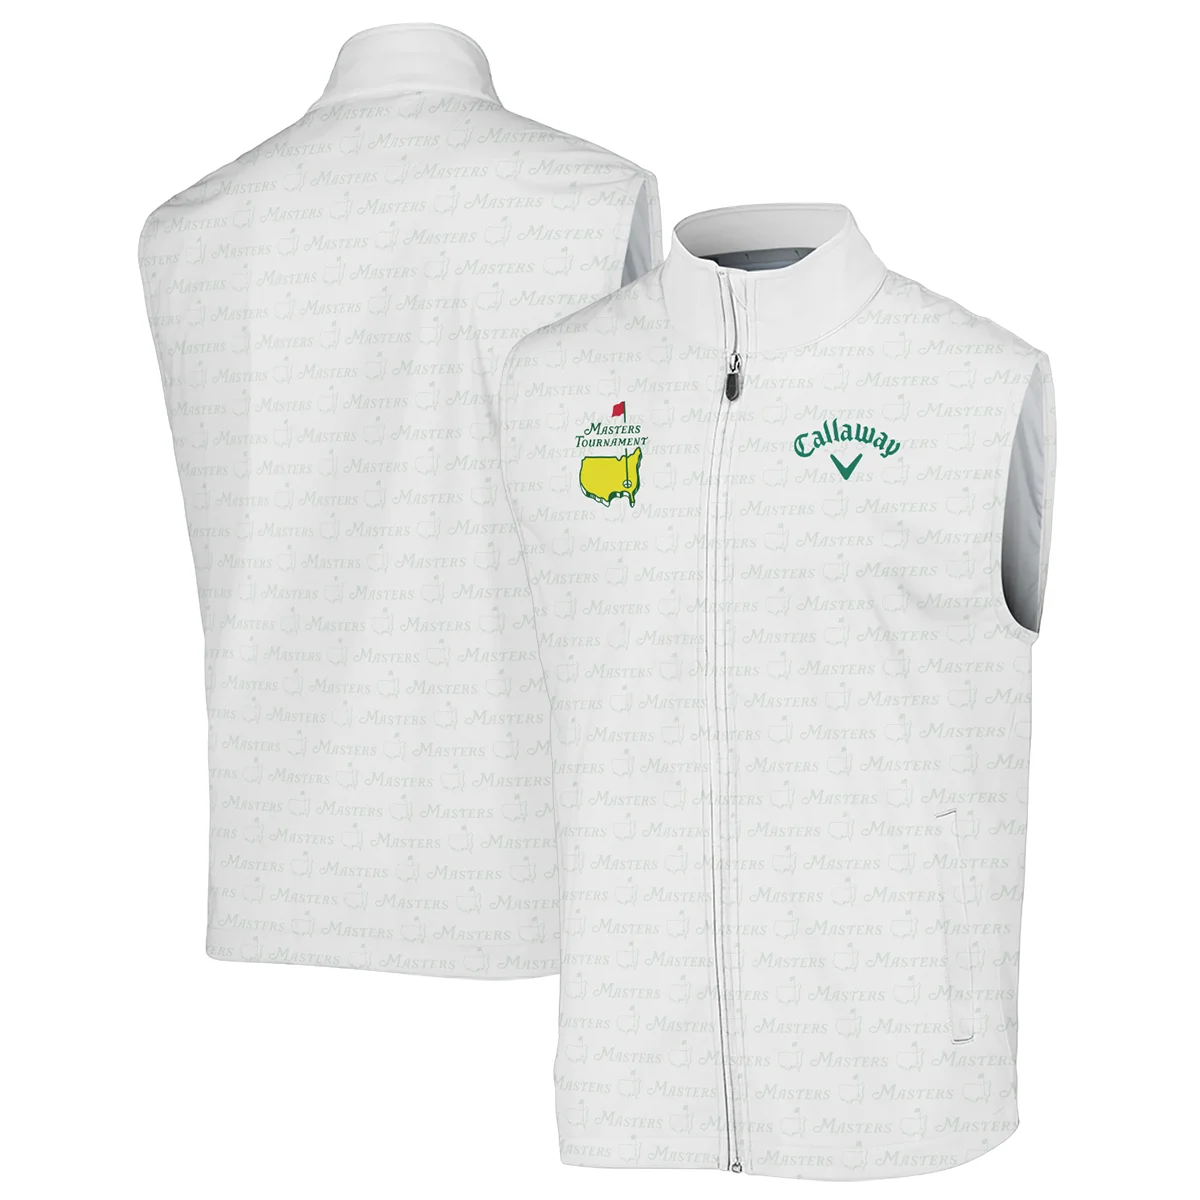 Pattern Masters Tournament Callaway Zipper Polo Shirt White Green Sport Love Clothing Zipper Polo Shirt For Men